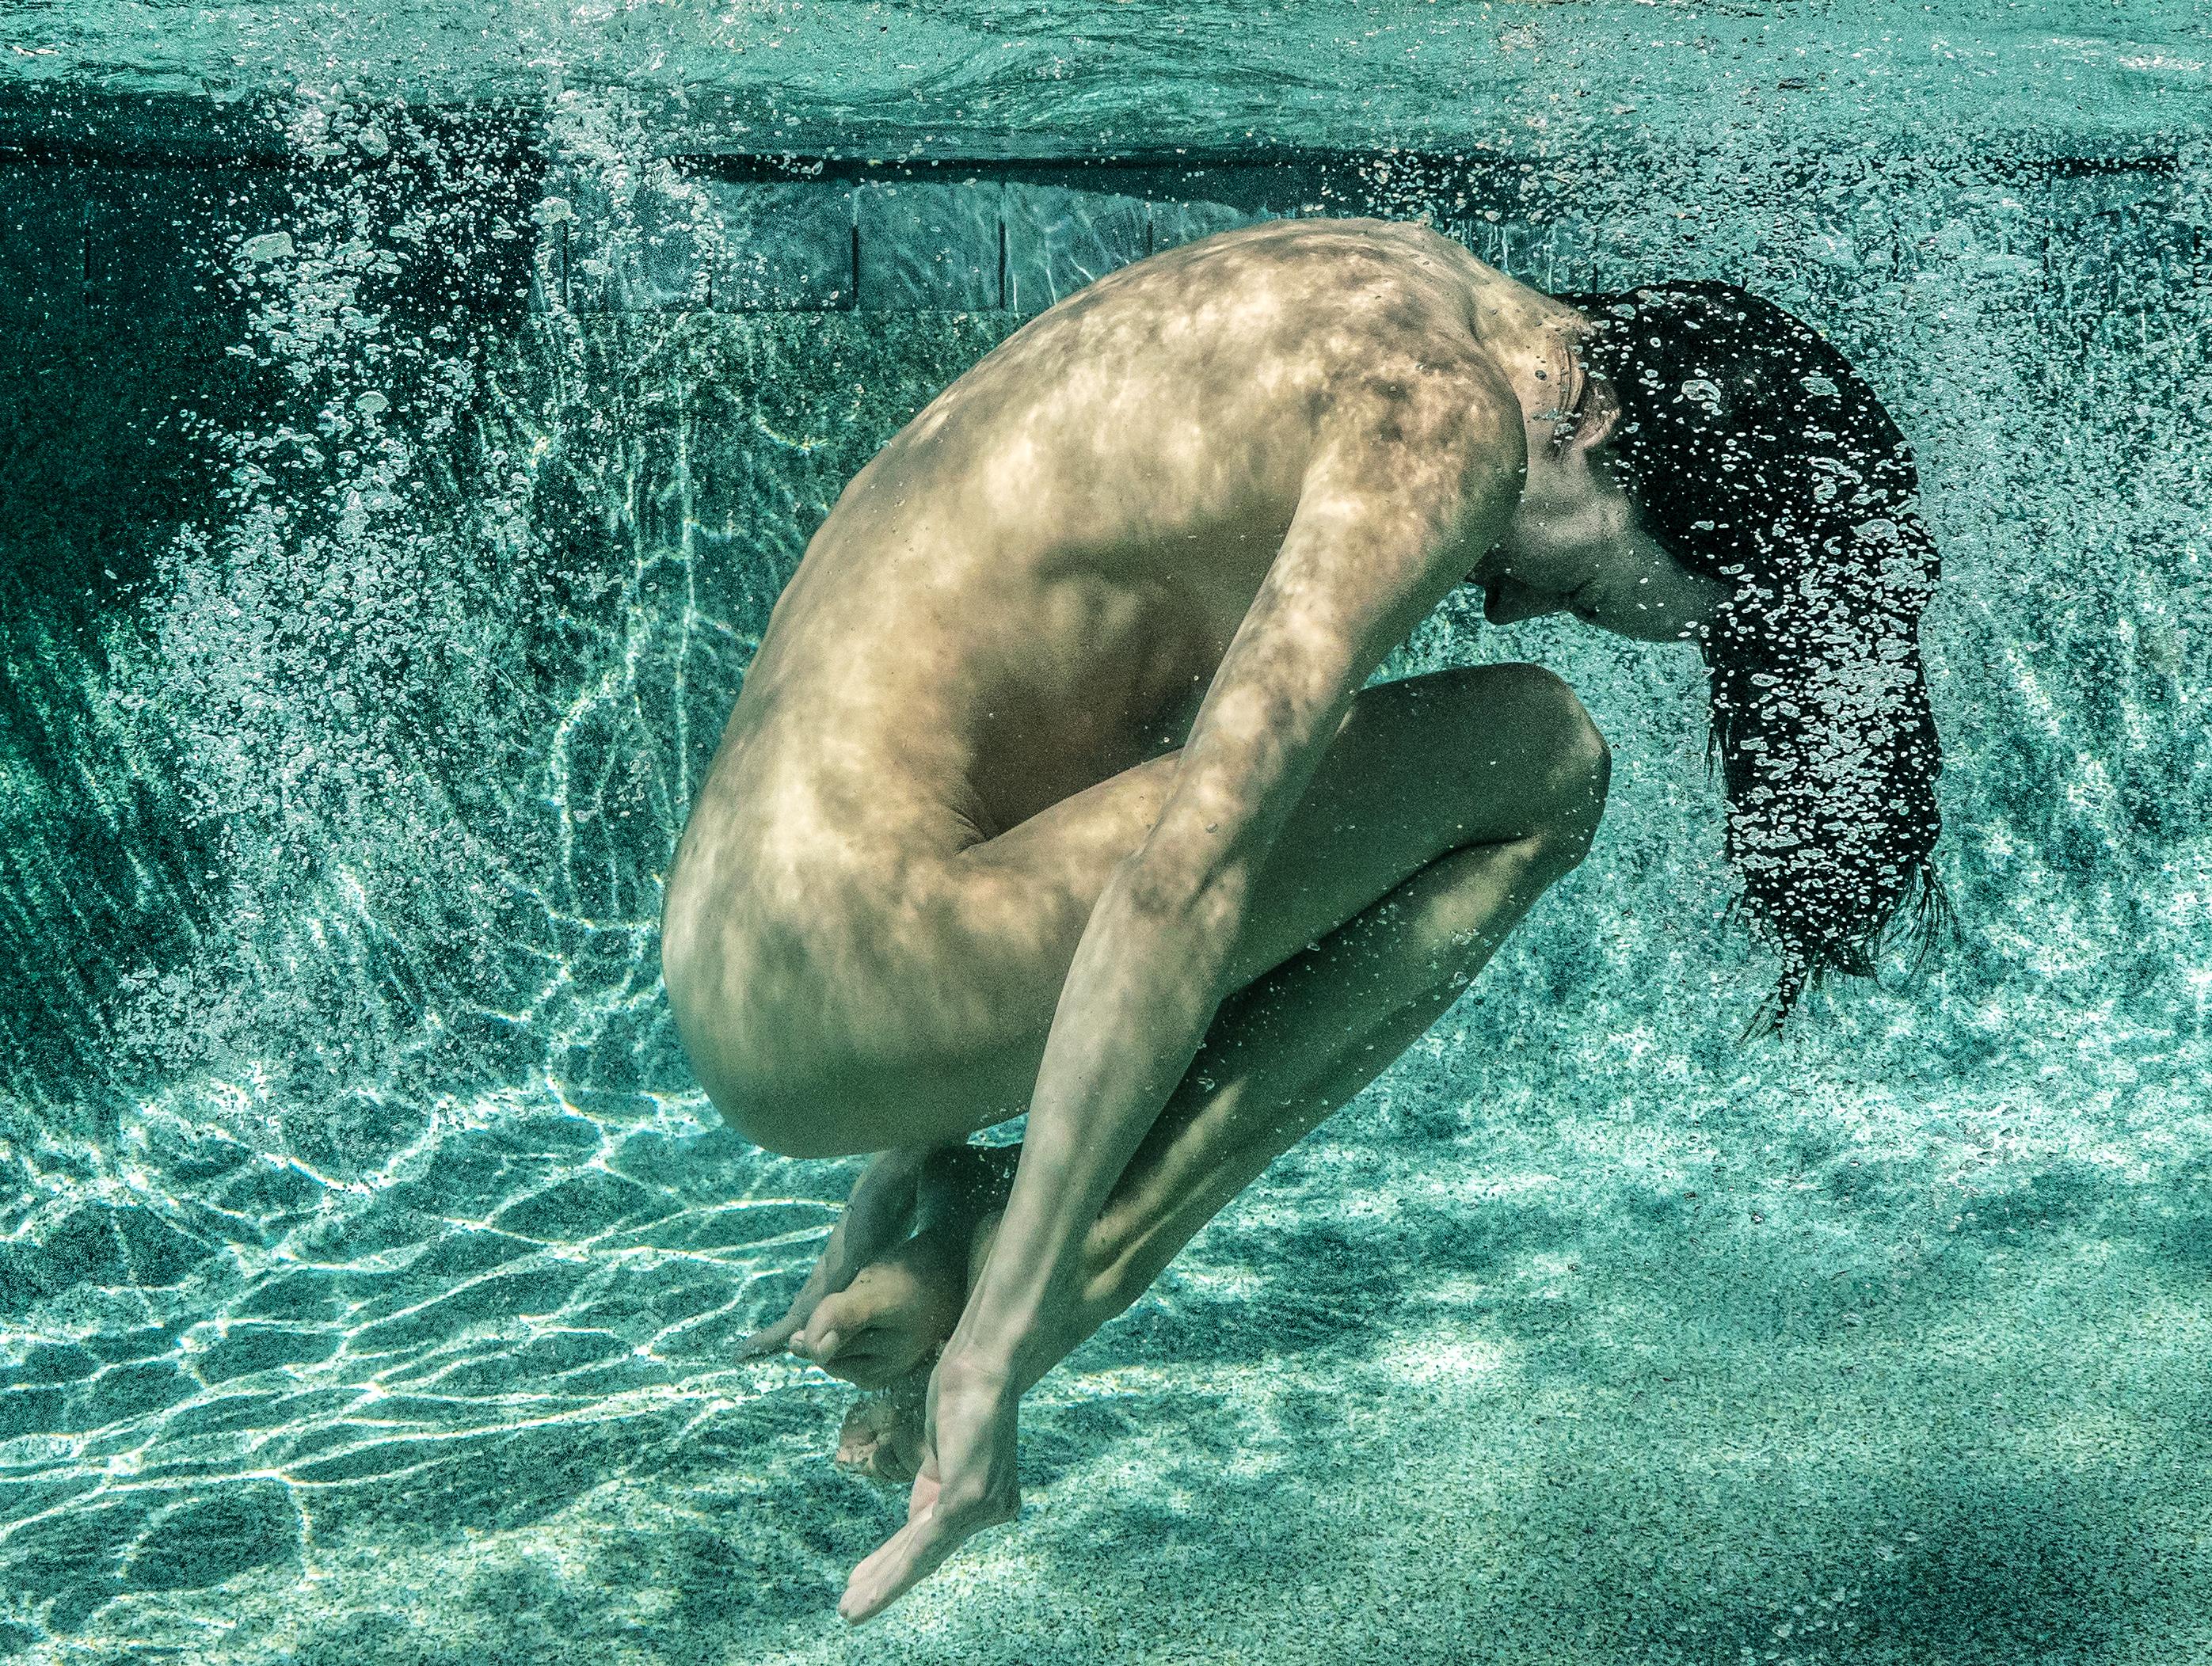 Green Roll III  - underwater nude photograph - print on aluminum 24x36